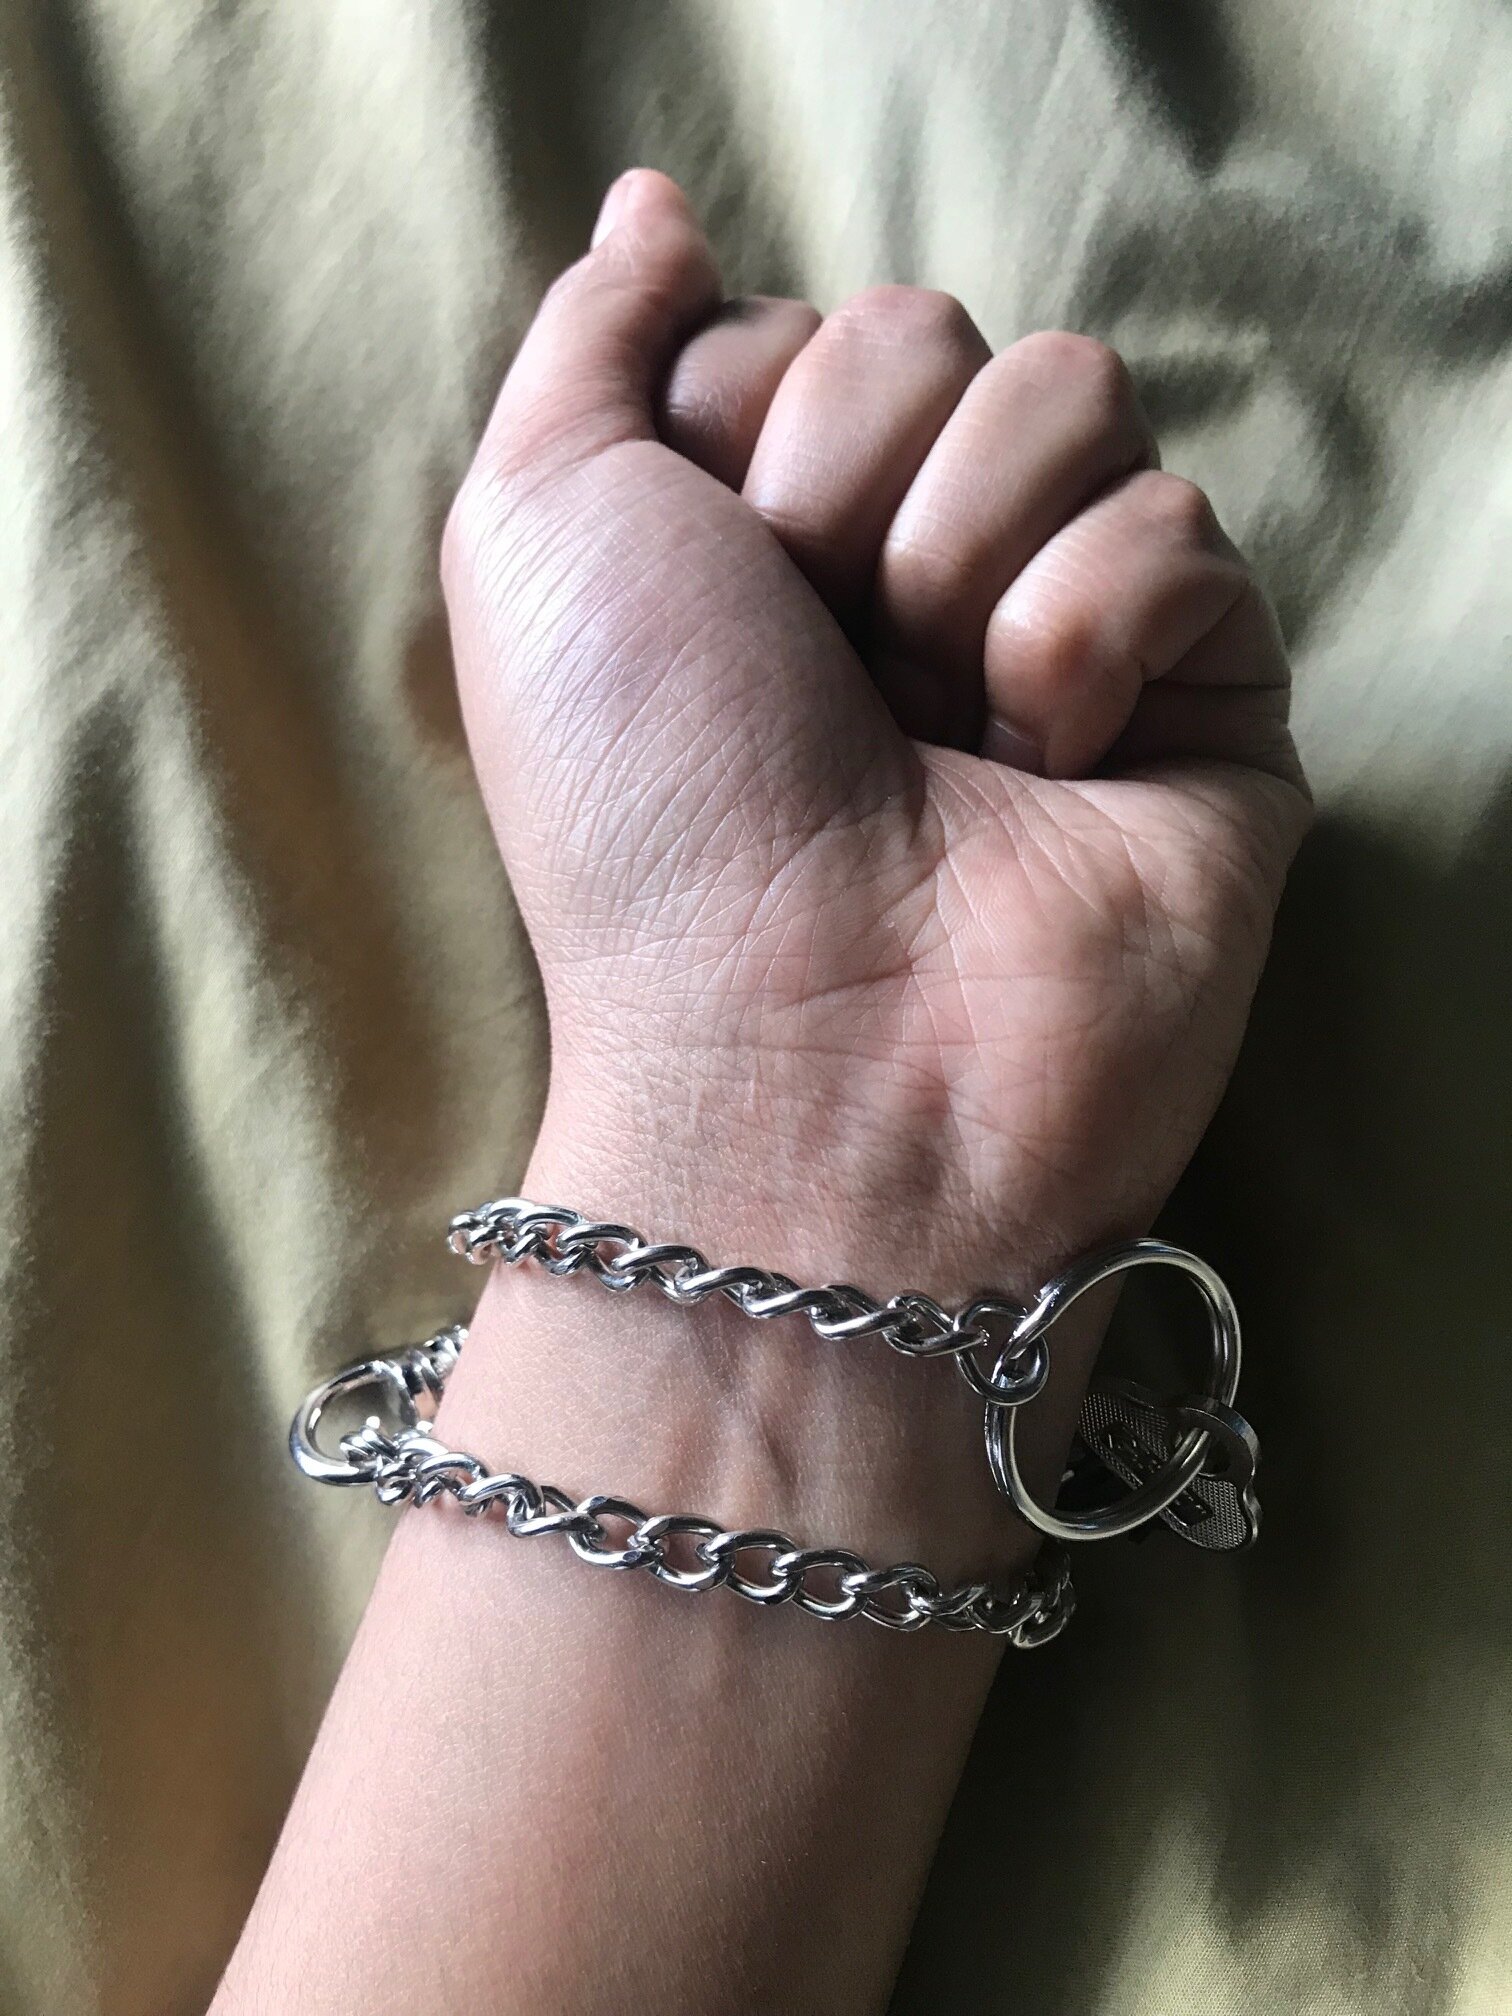 Elizabeth_Photo3 (Chains on wrist).jpeg